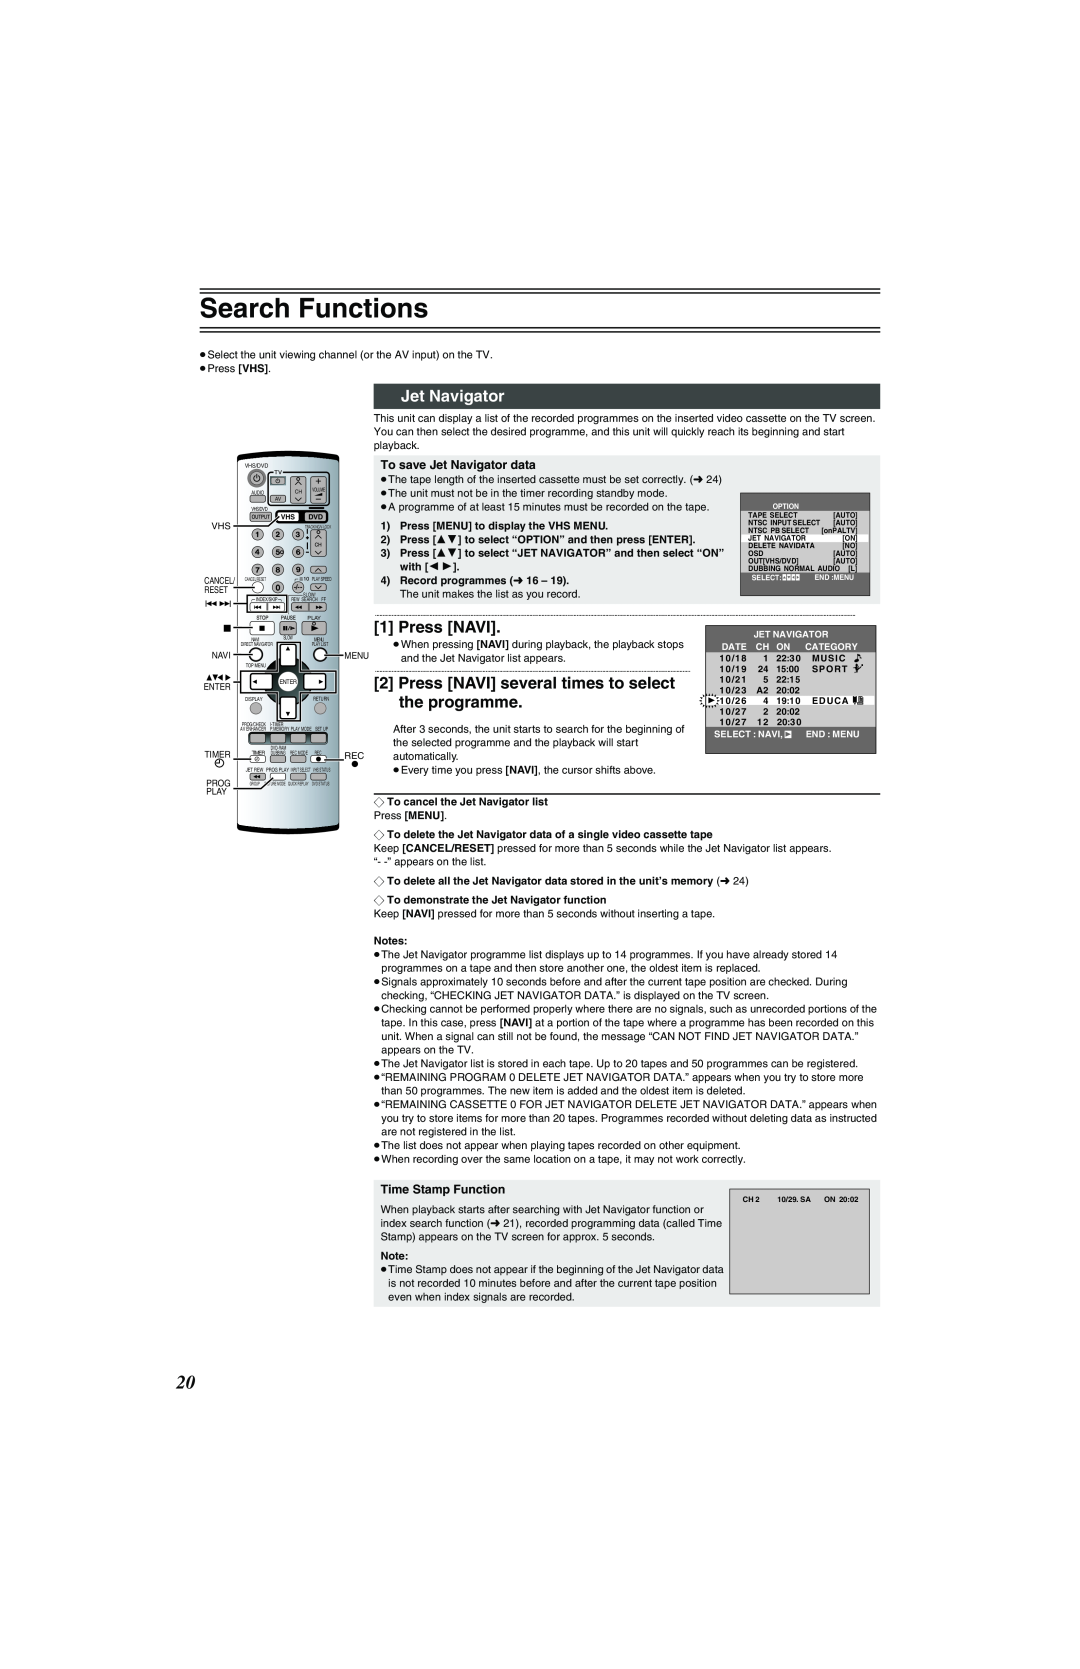 Panasonic NV-VP32 Series Search Functions, Jet Navigator, Press NAVI, the programme, Press MENU to display the VHS MENU 